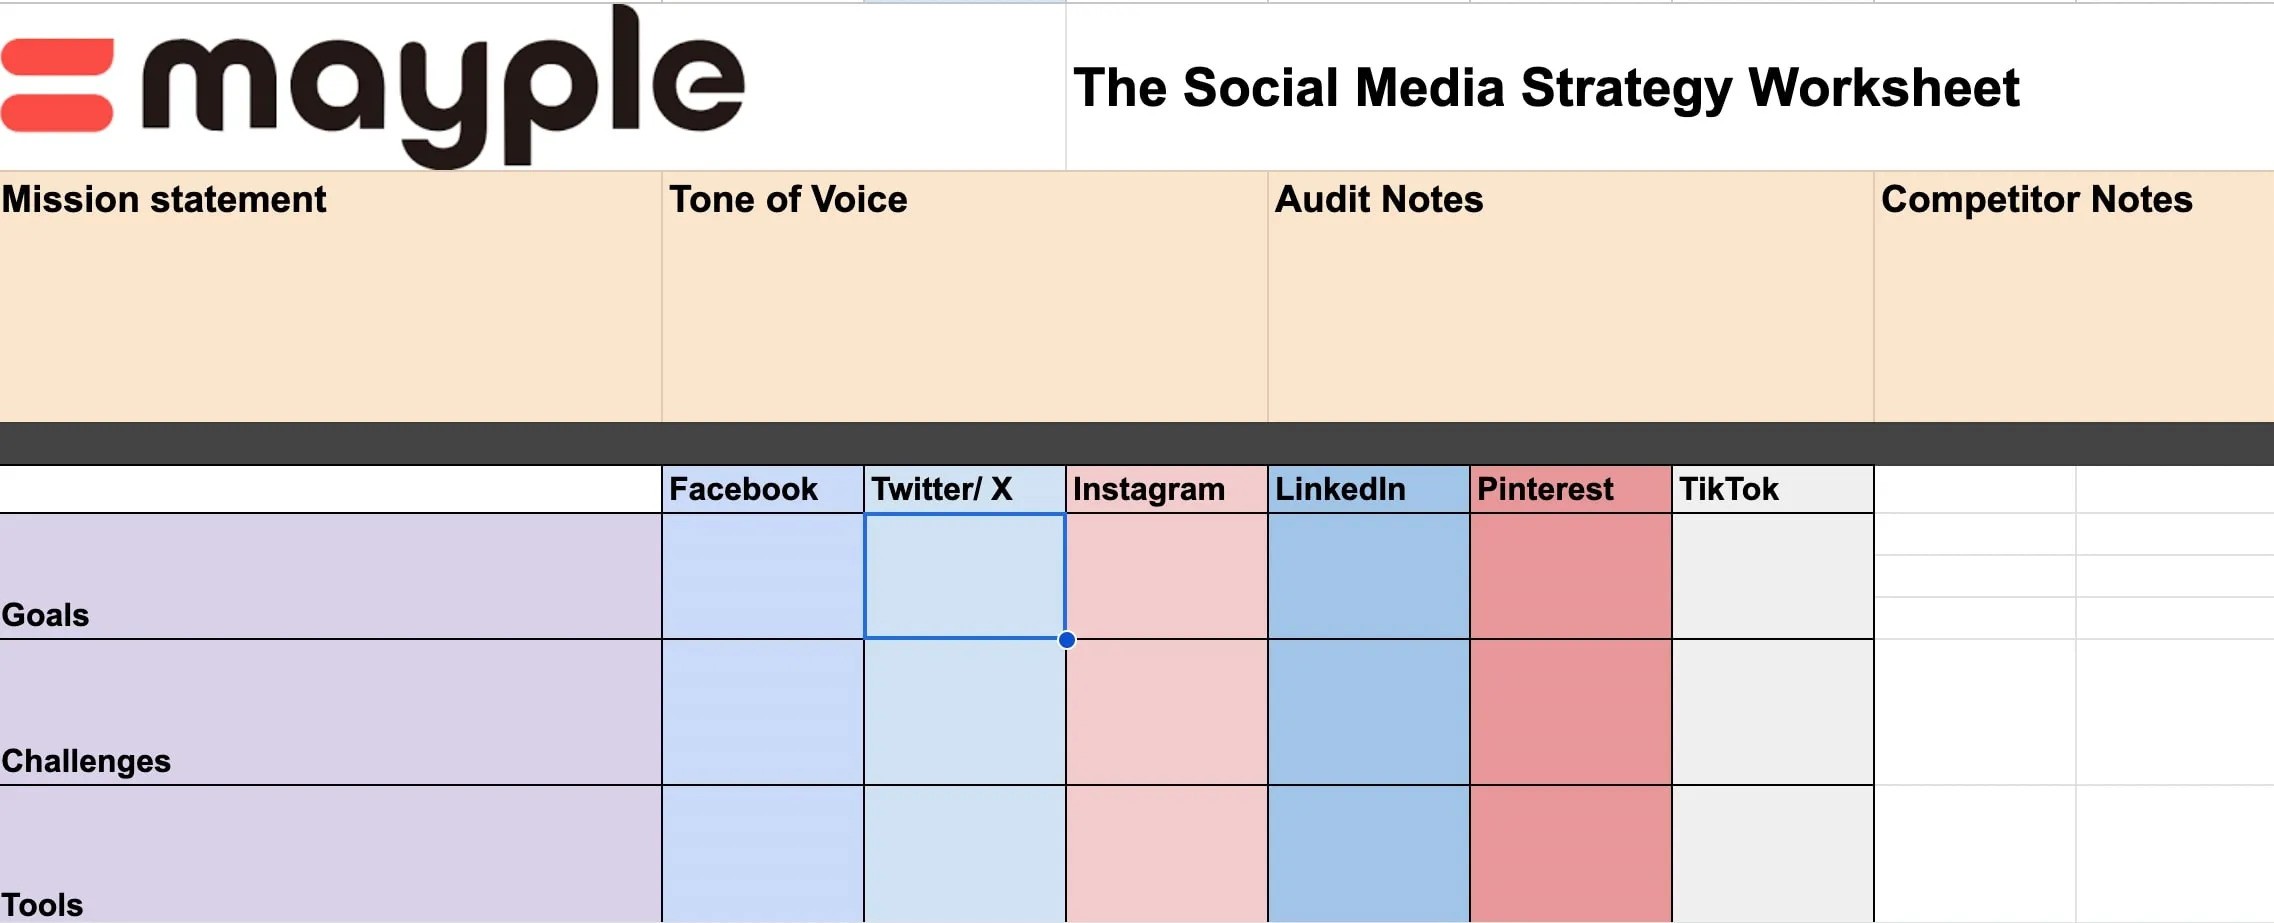 mayple-social-media-strategy-worksheet